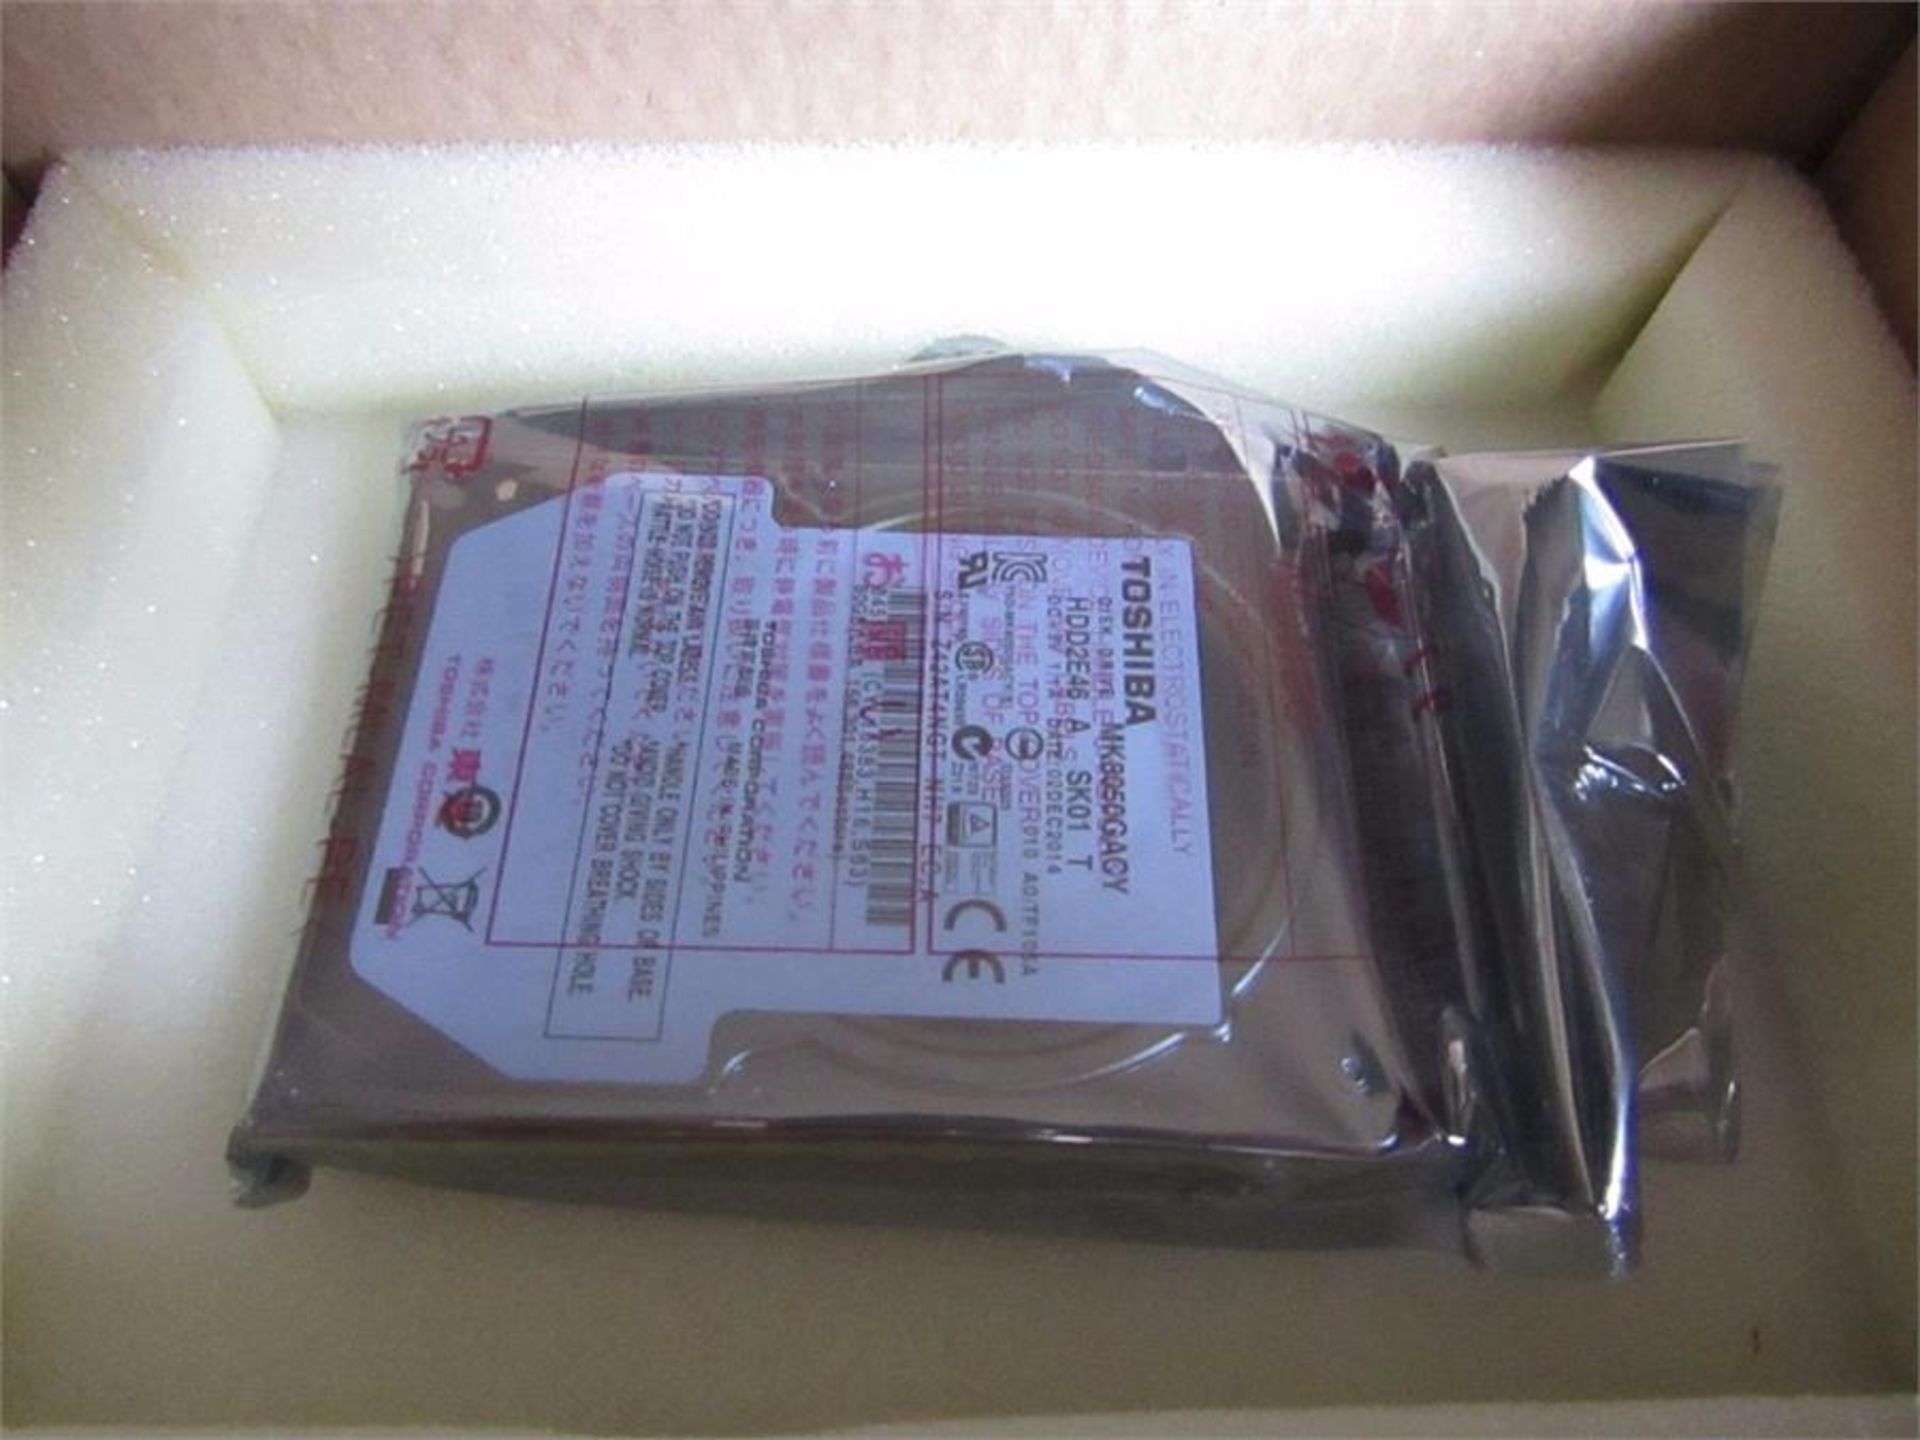 Toshiba Power on 80GB 2.5in PATA Internal Hard Drive MK8050GACY 1005 7761951